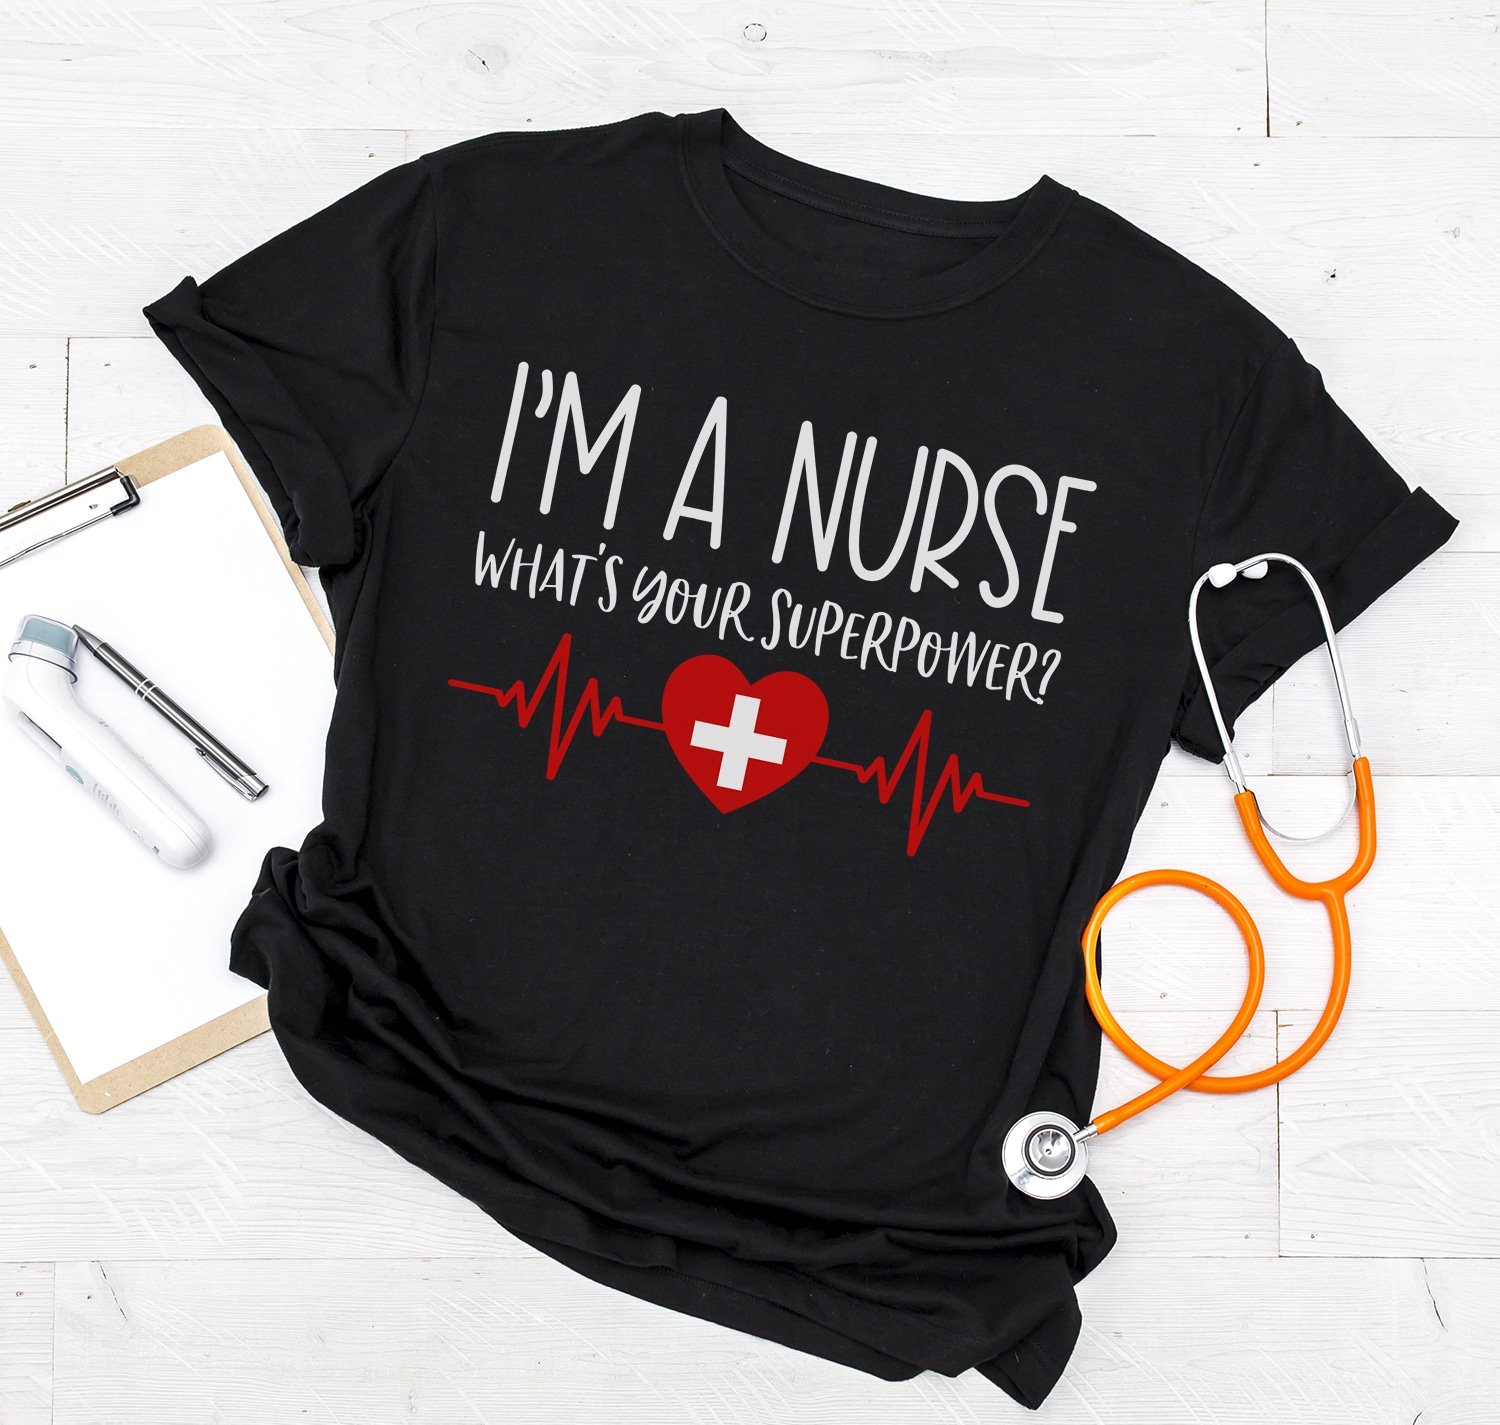 nurse superhero shirt with accessories